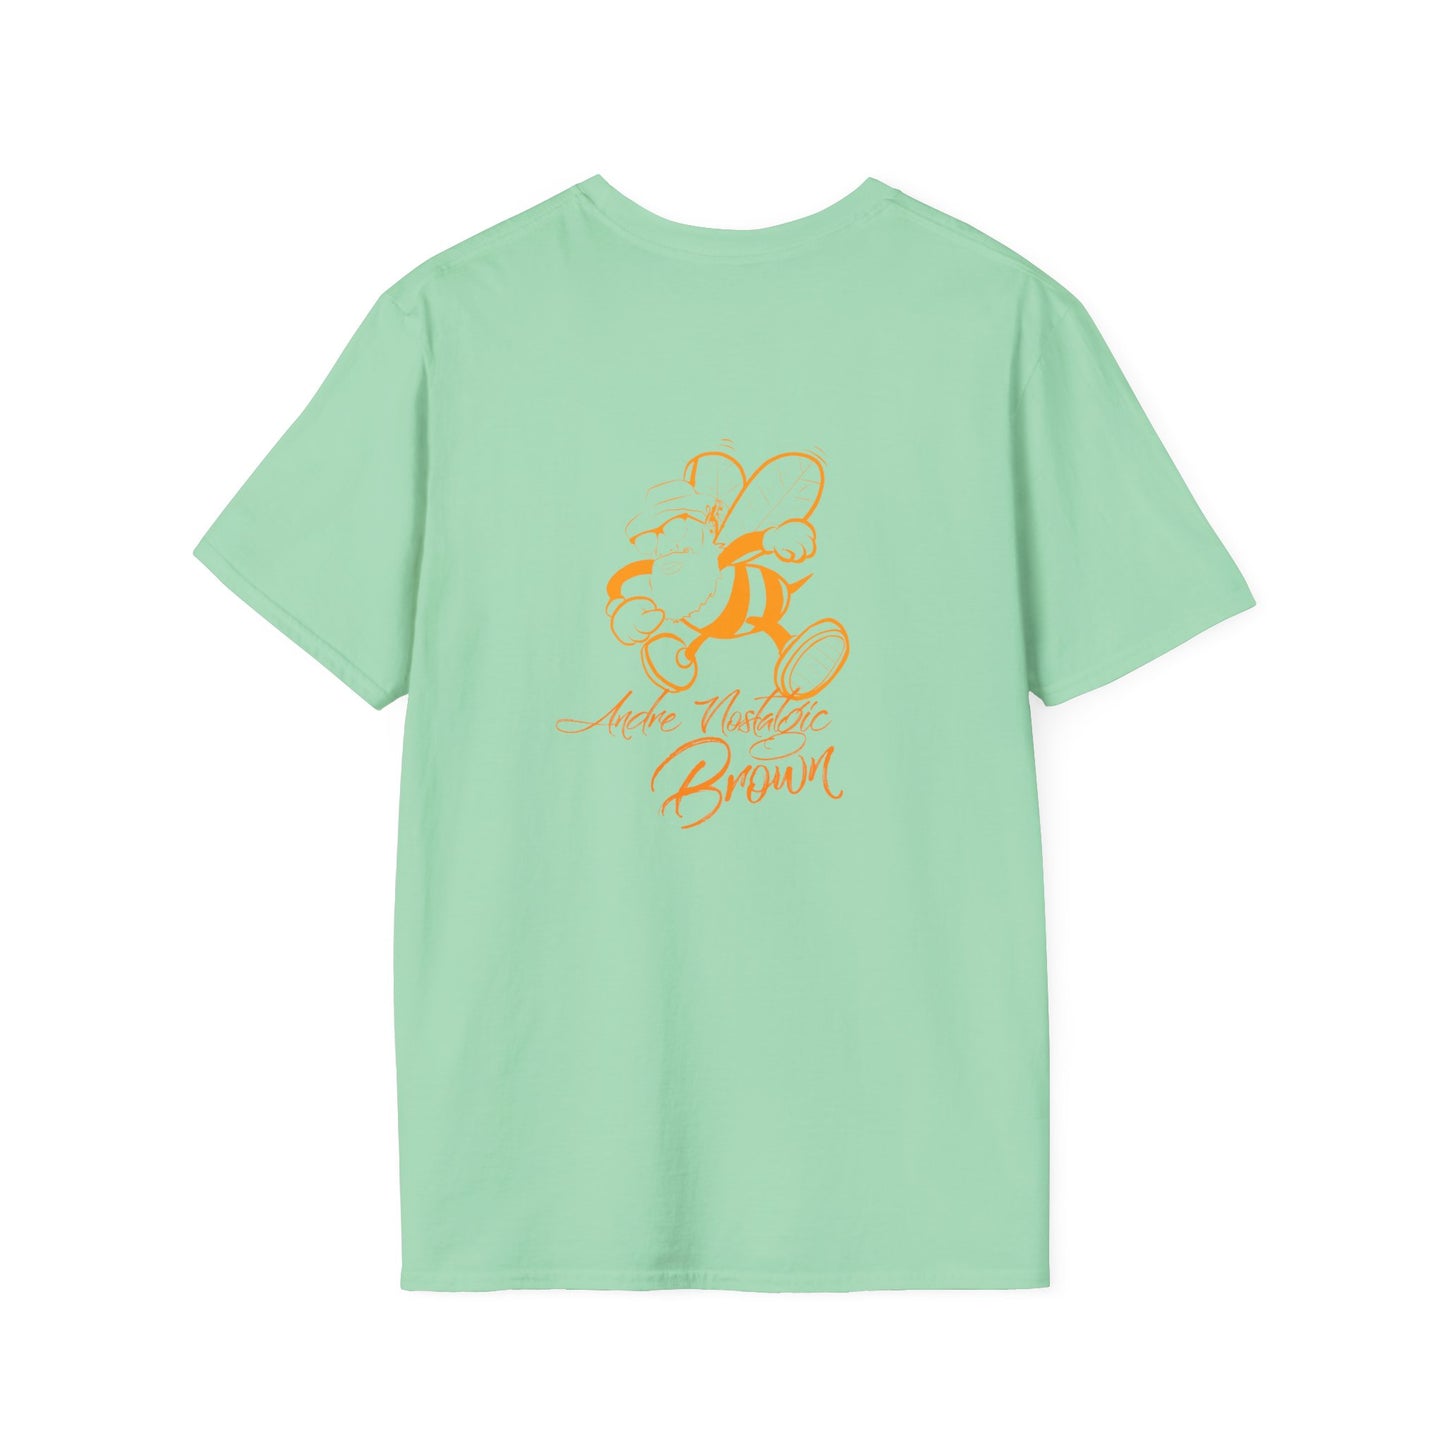 Blk Insct Famili Unisex Softstyle T-Shirt